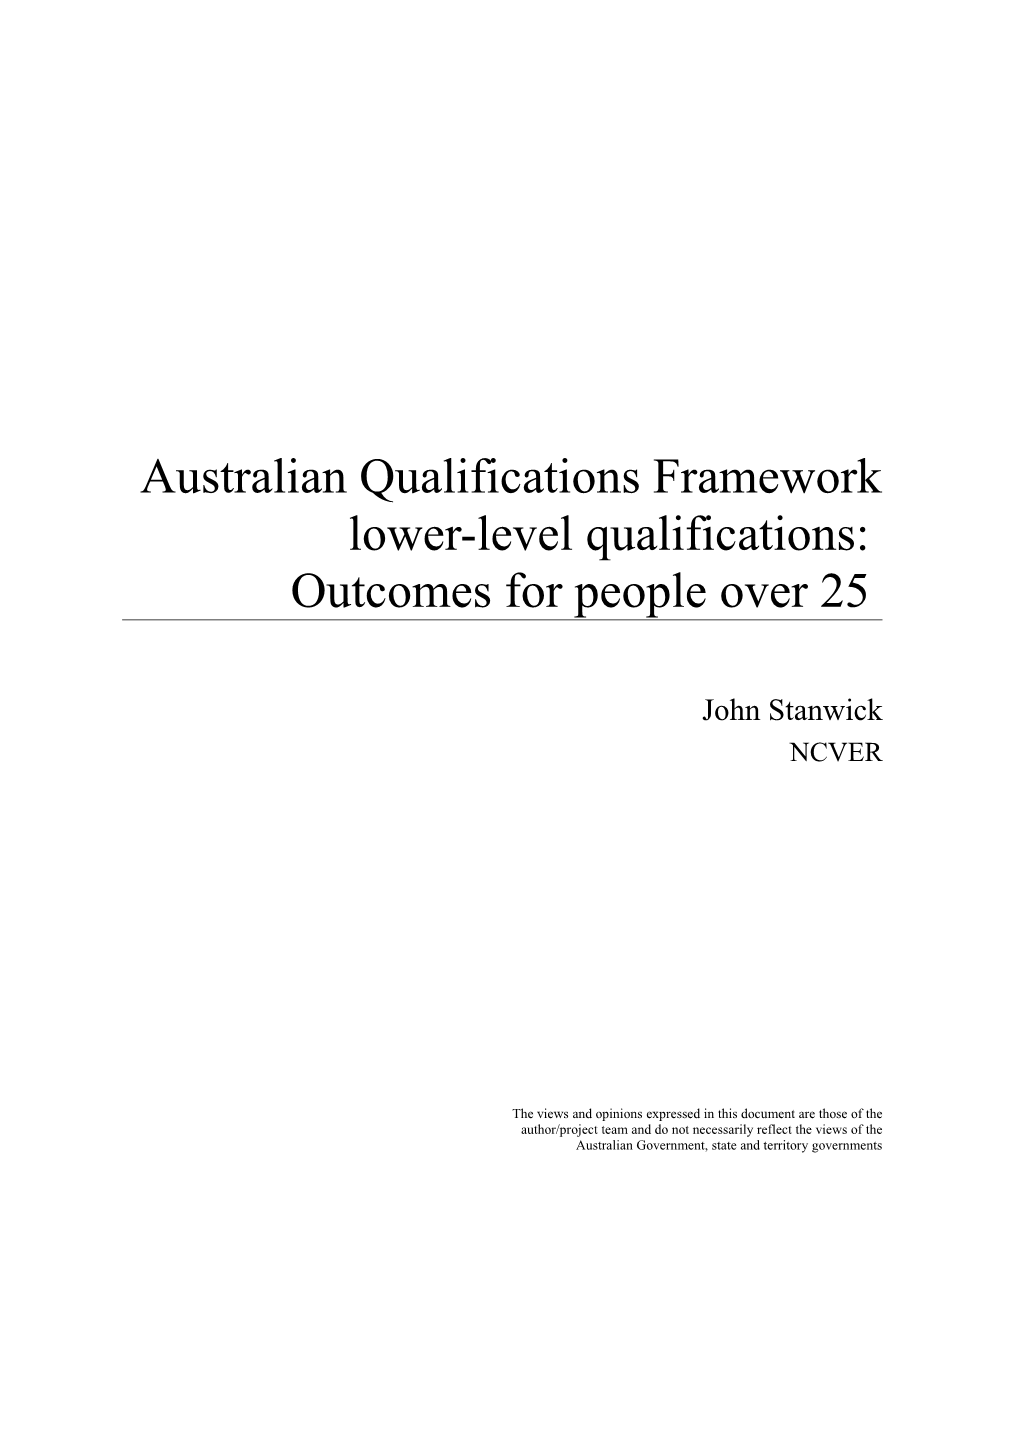 AQF Lower-Level Quals: Overs 25S